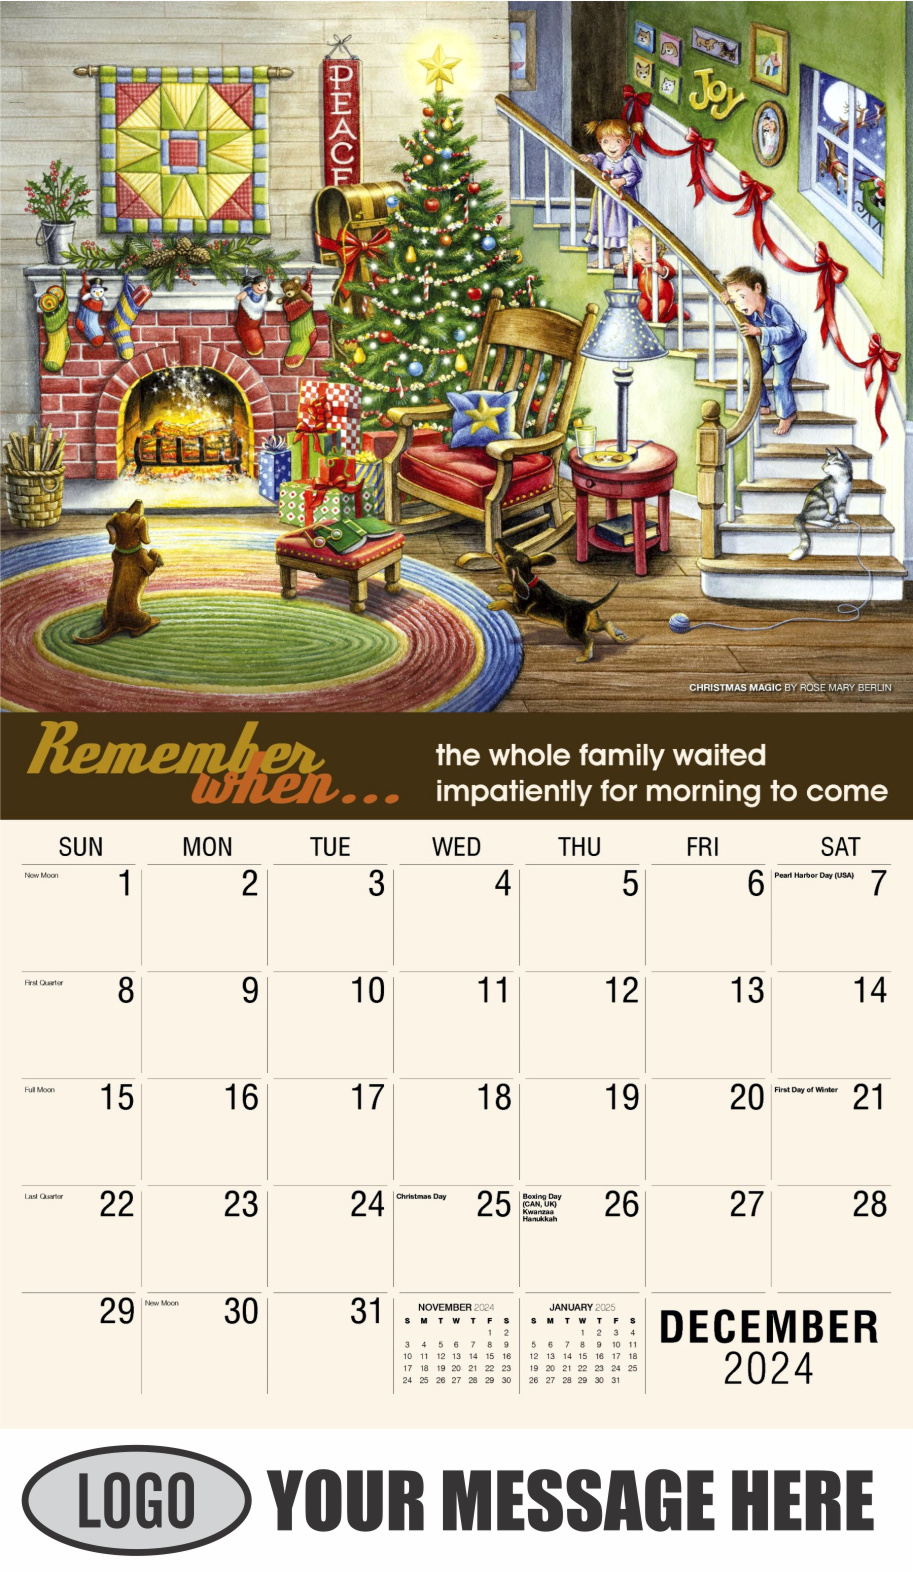 Remember When 2024 Business Advertising Calendar - December